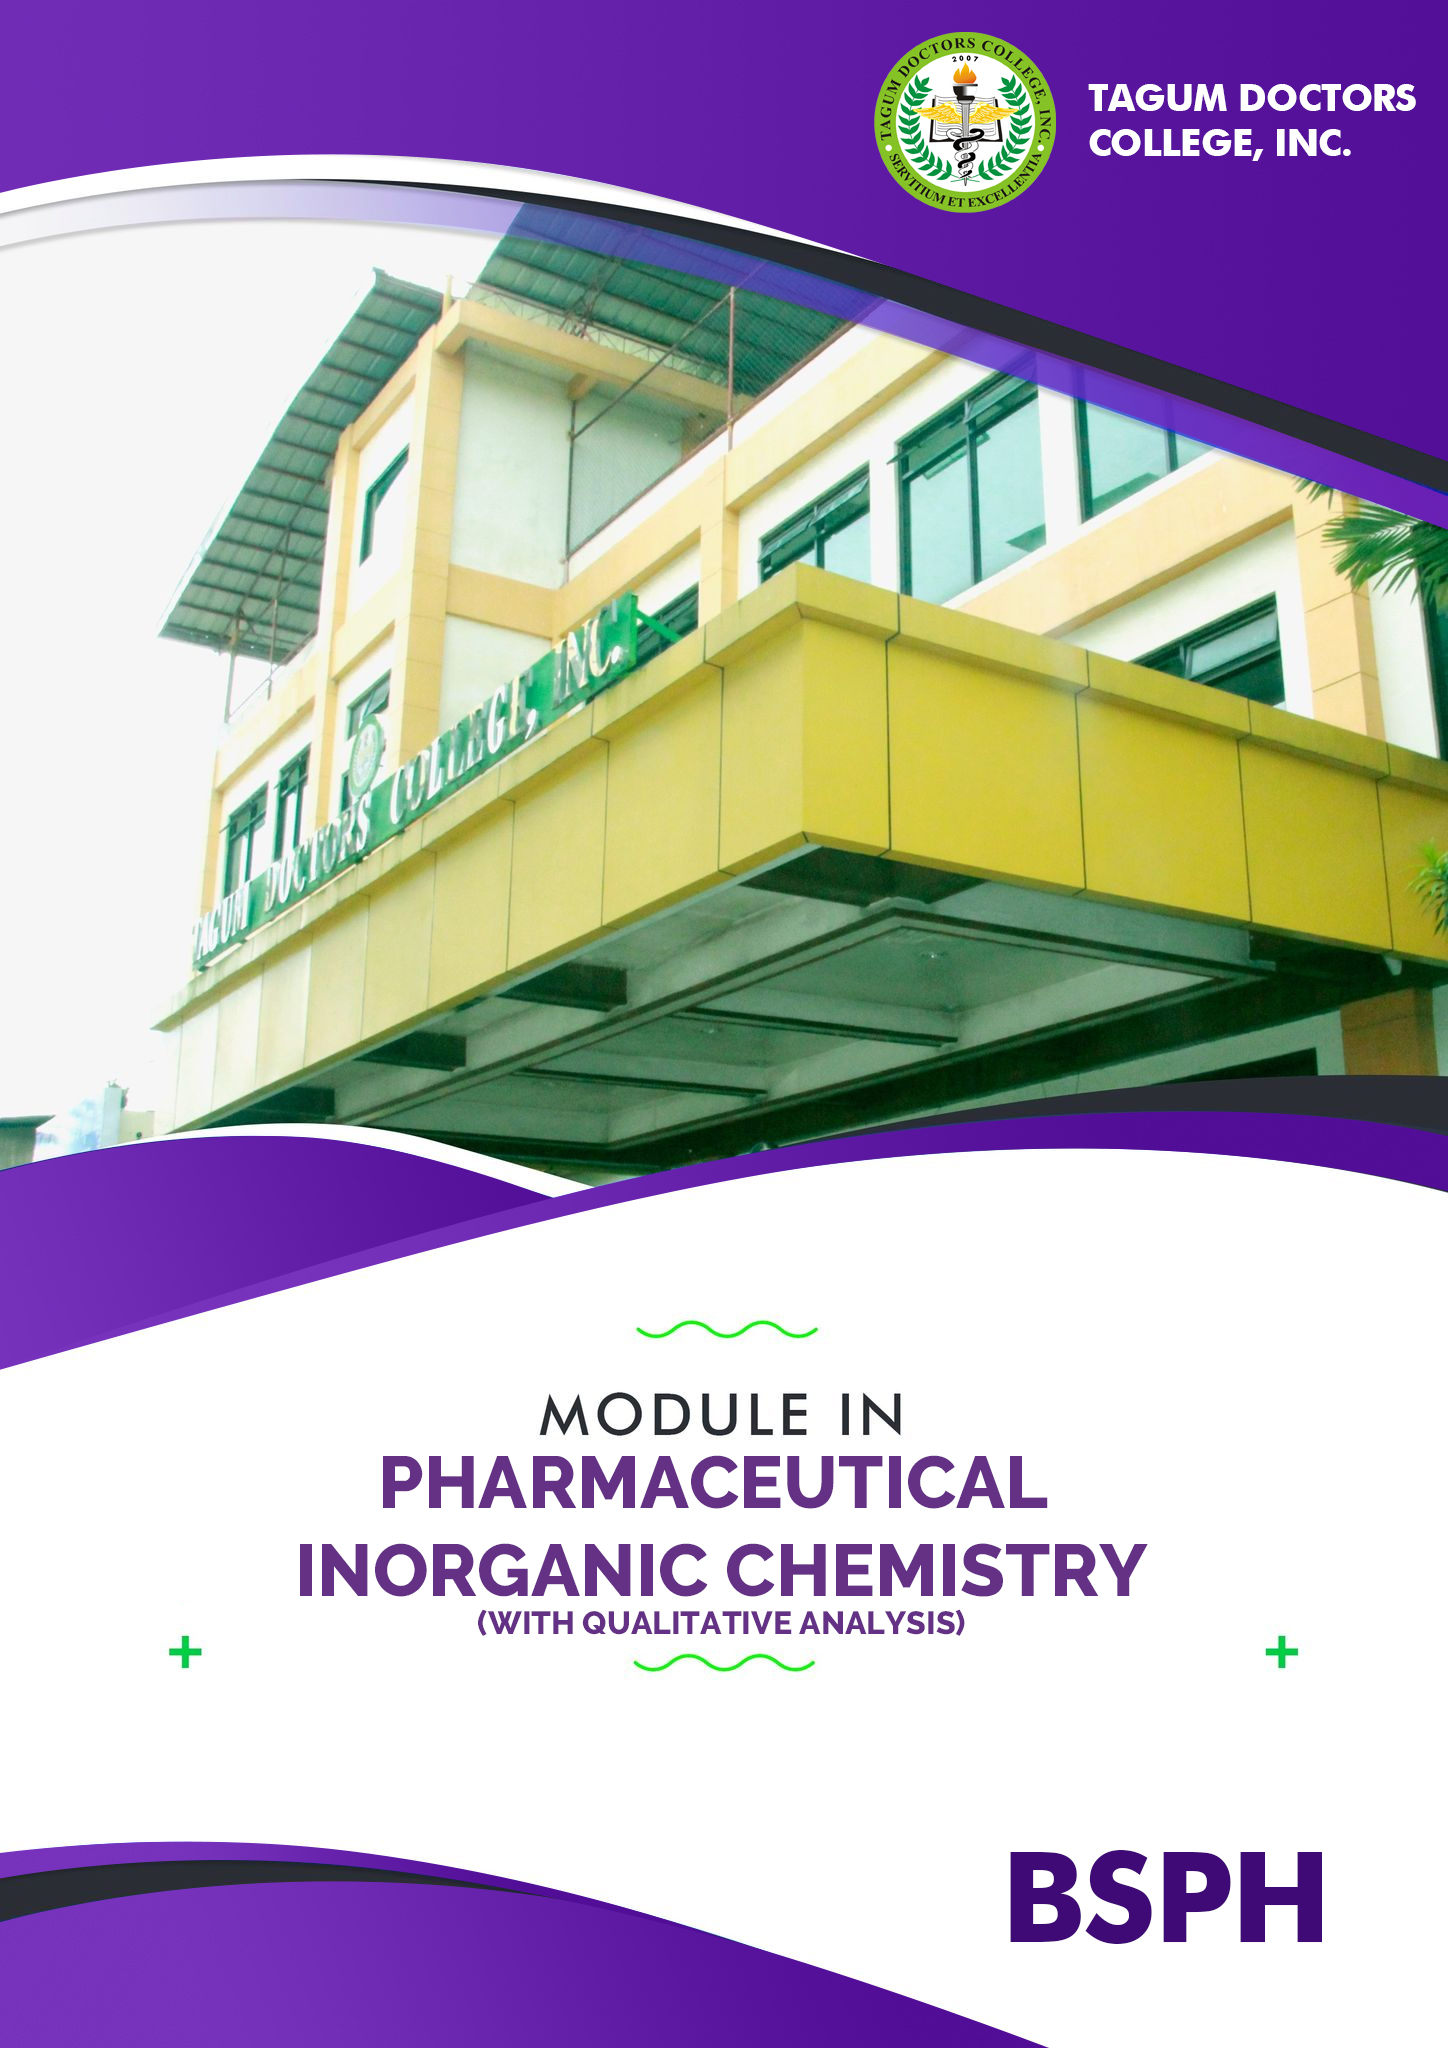 Pharmaceutical Inorganic Chemistry (w/ Qualitative Analysis) - BSPh 1A